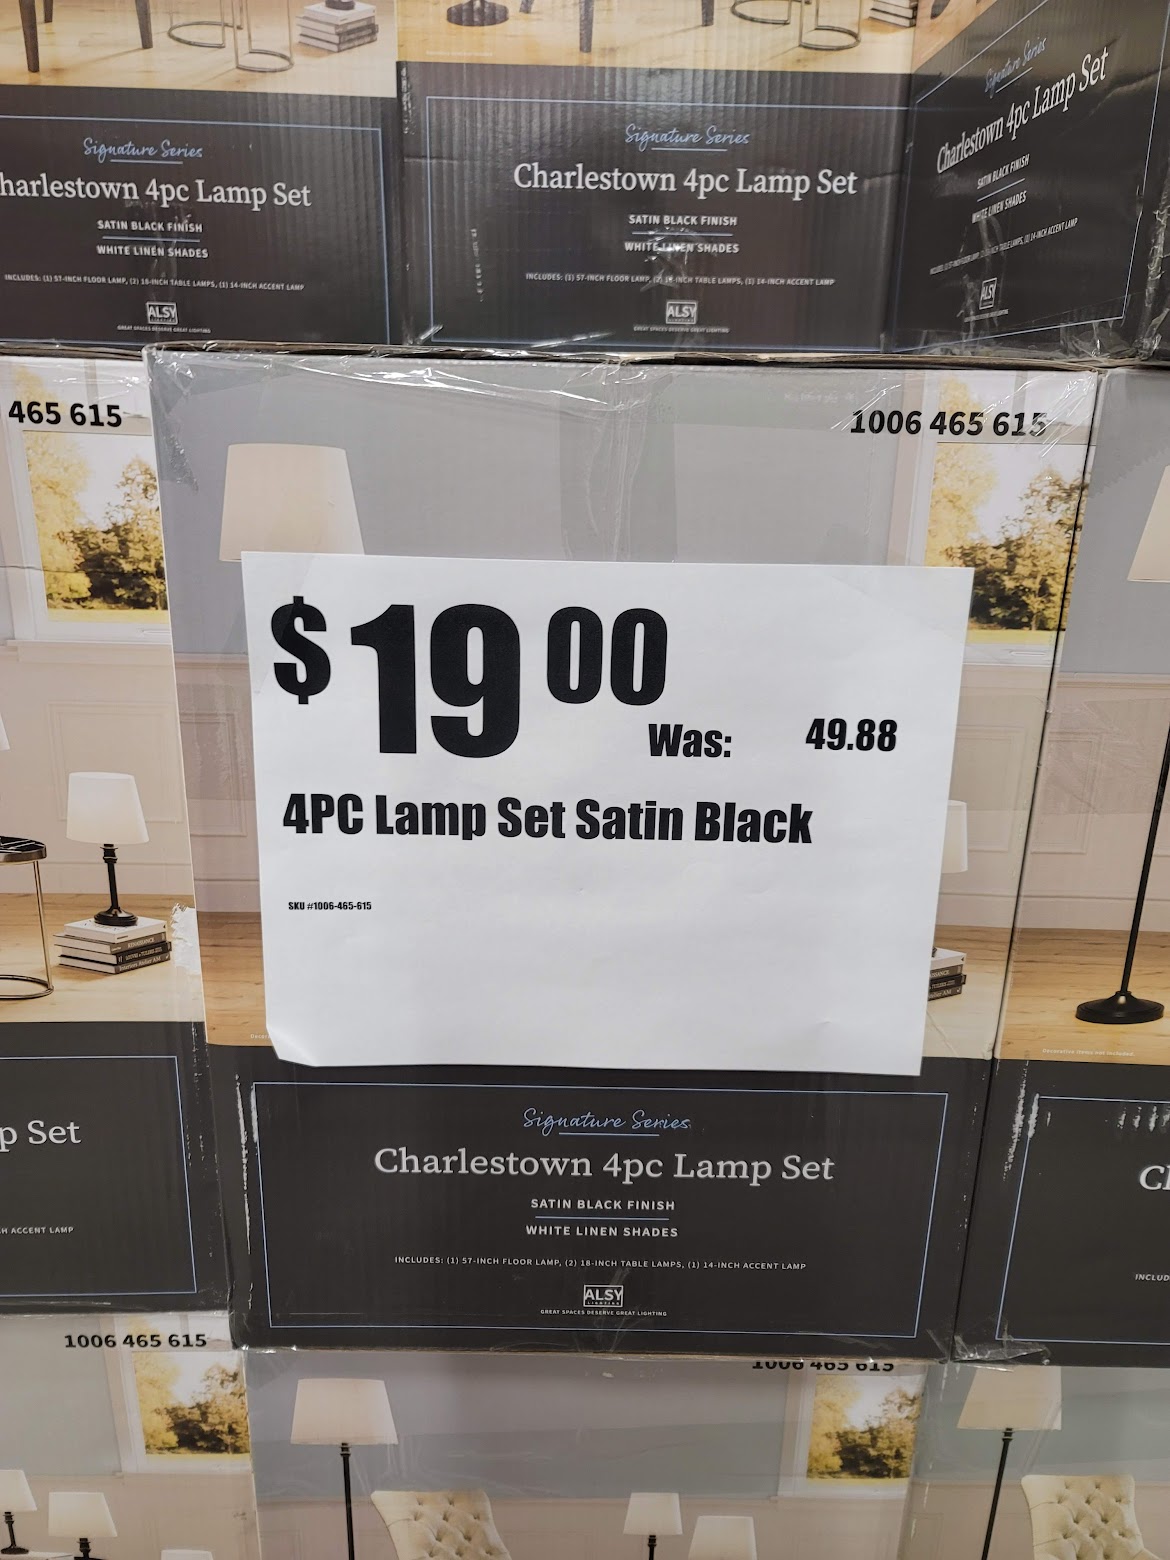 YMMV Home Depot Charlestown 4 pc lamp set $19